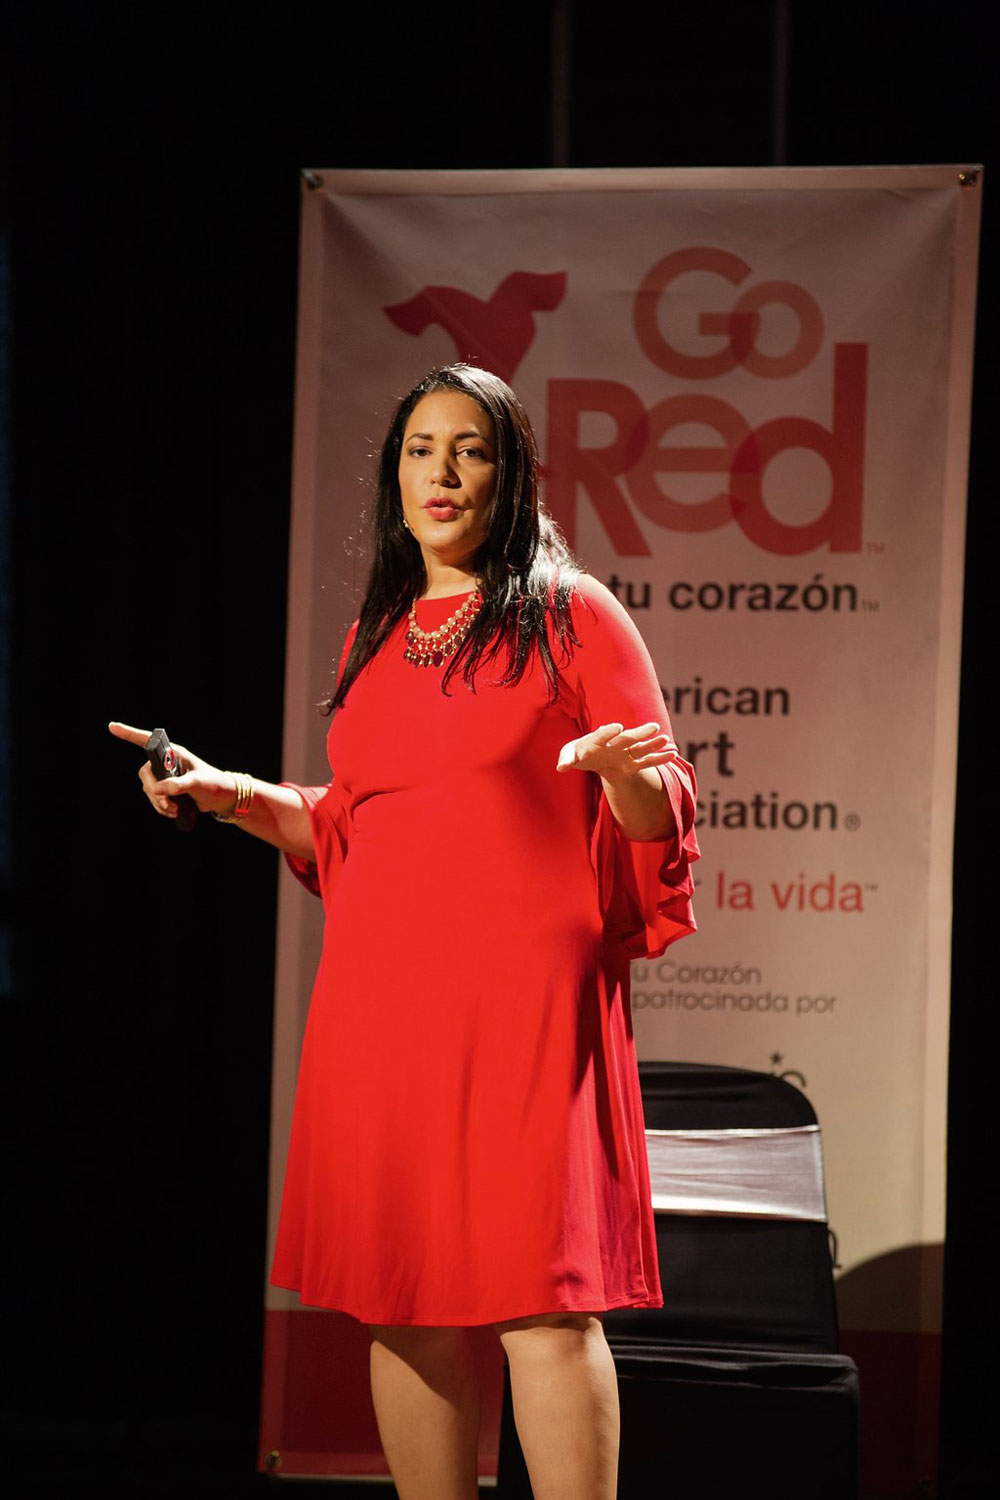 Dr Carmen Landrau M.D. Motivational Keynote Speaker, Cardiologist and Executive Business Coach